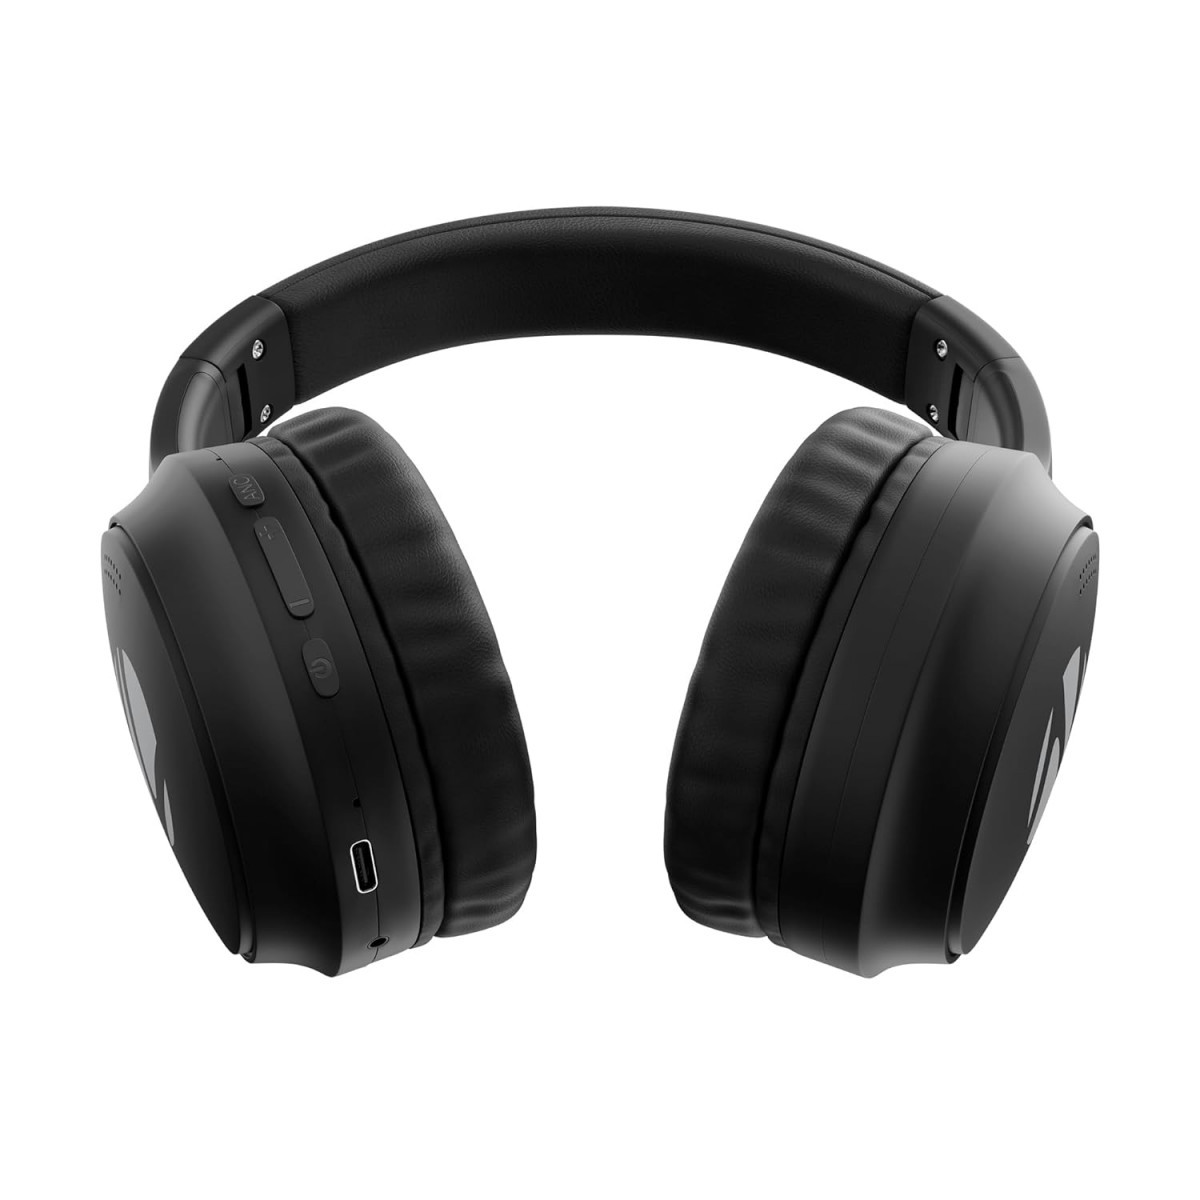 ZEBRONICS New Launch AEON Wireless Headphone with 110h Battery Backup Black